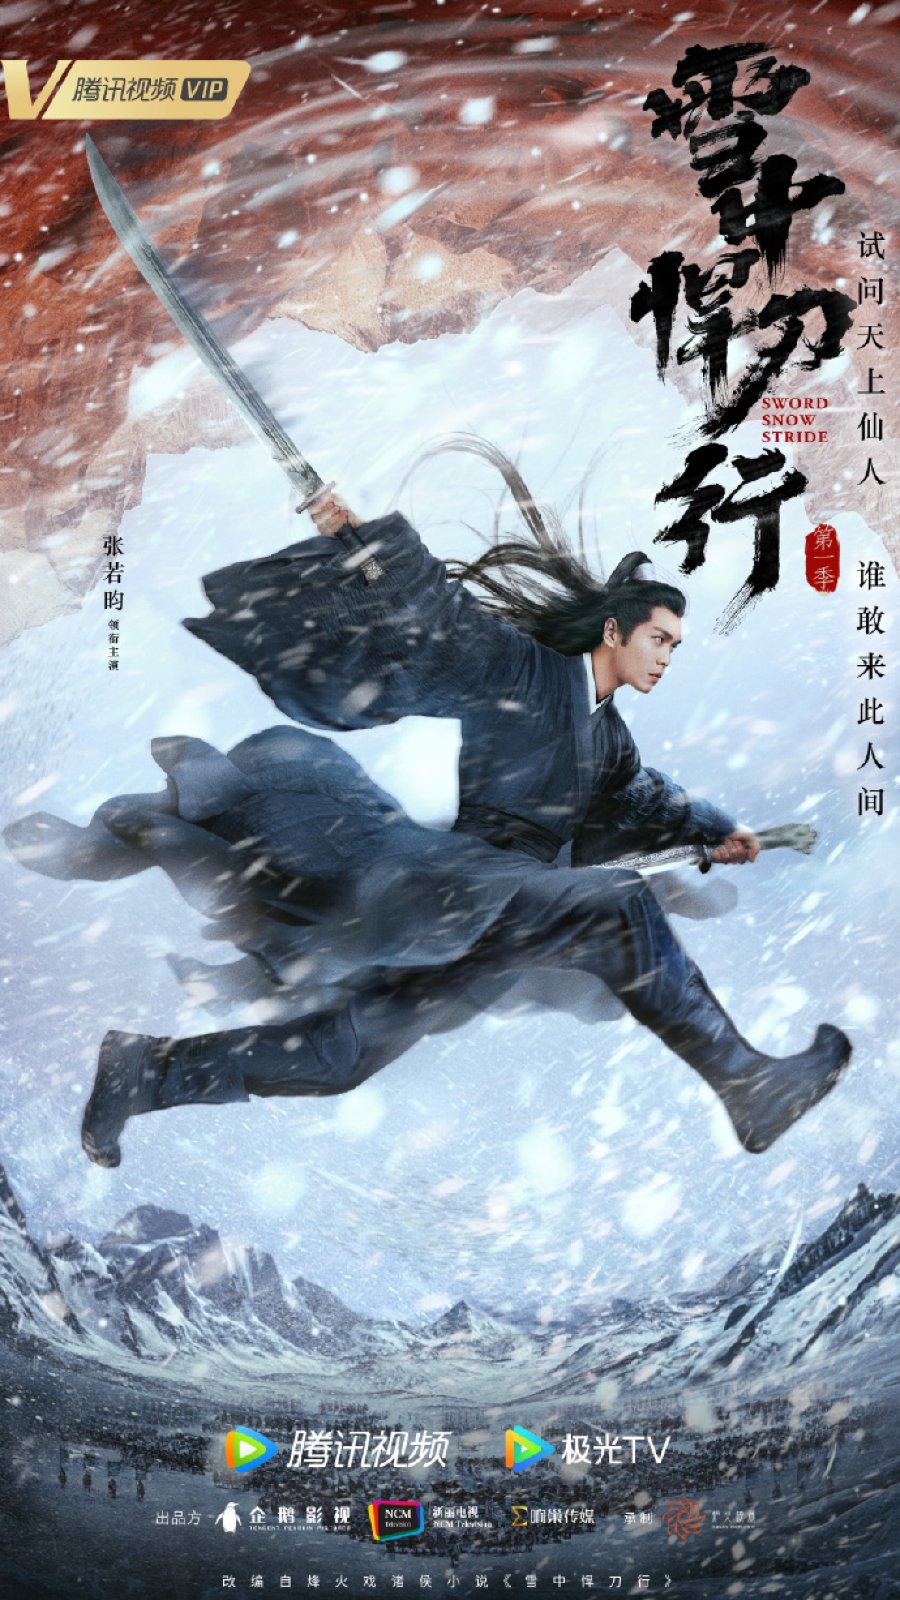 Poster Sword Snow Stride